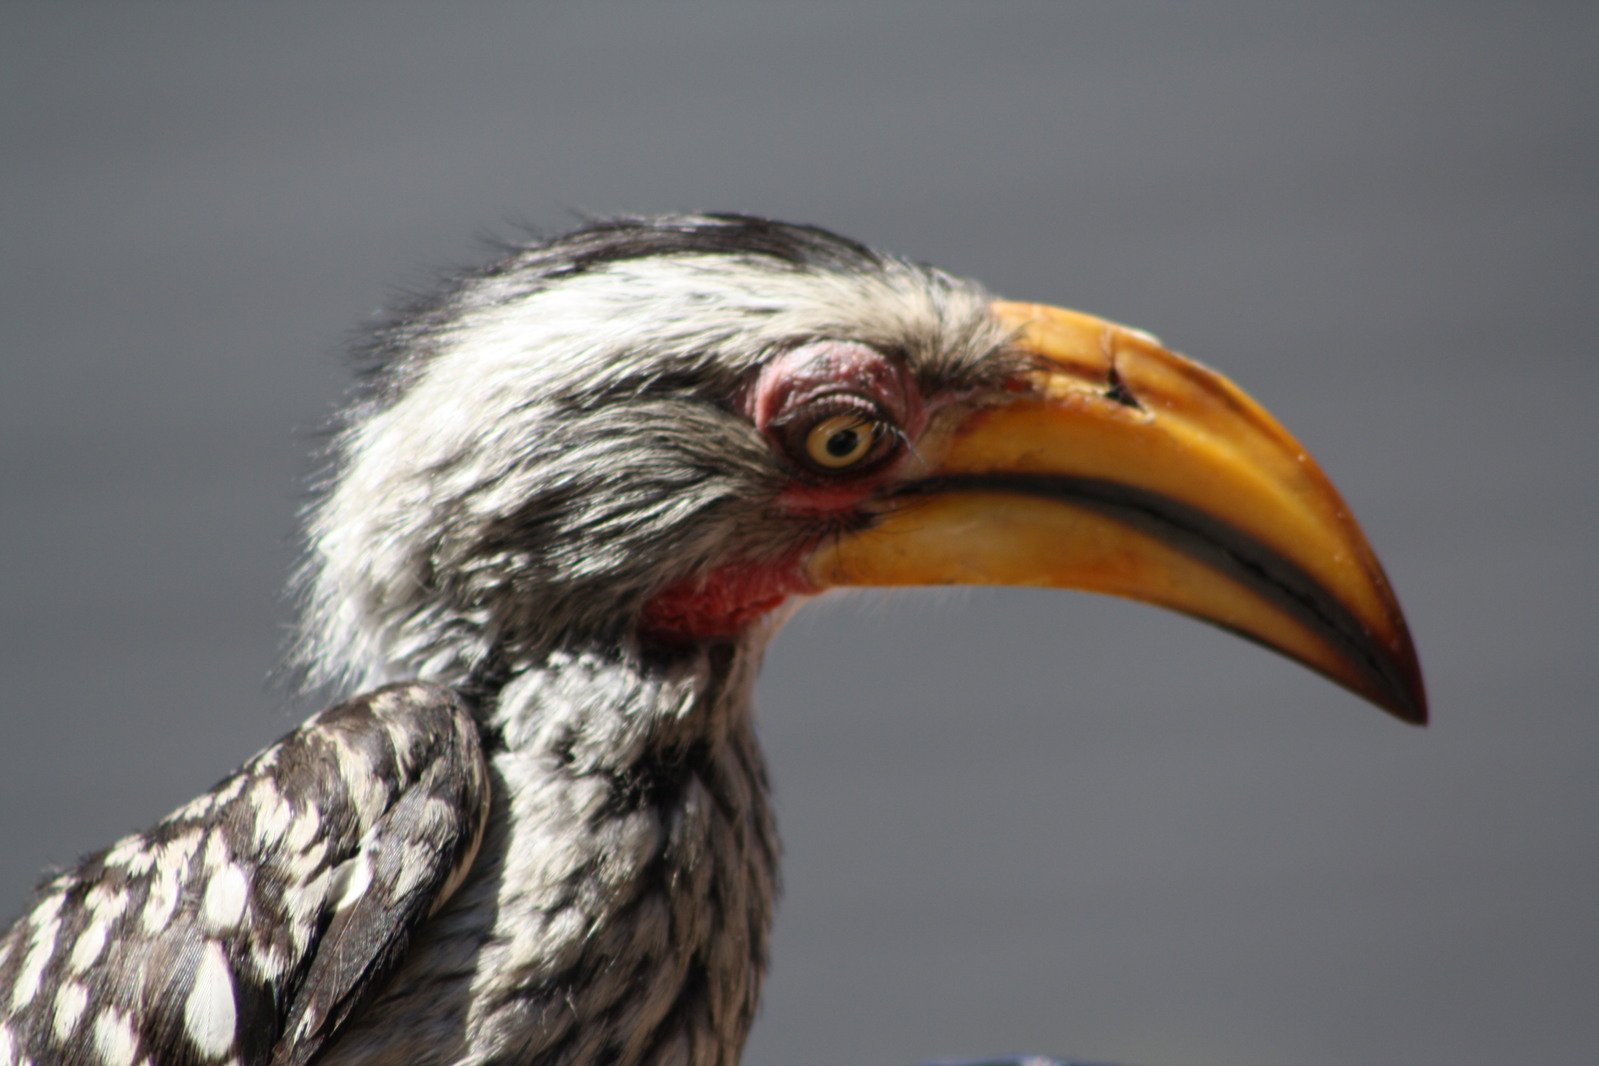 a close up of a bird with an orange beak